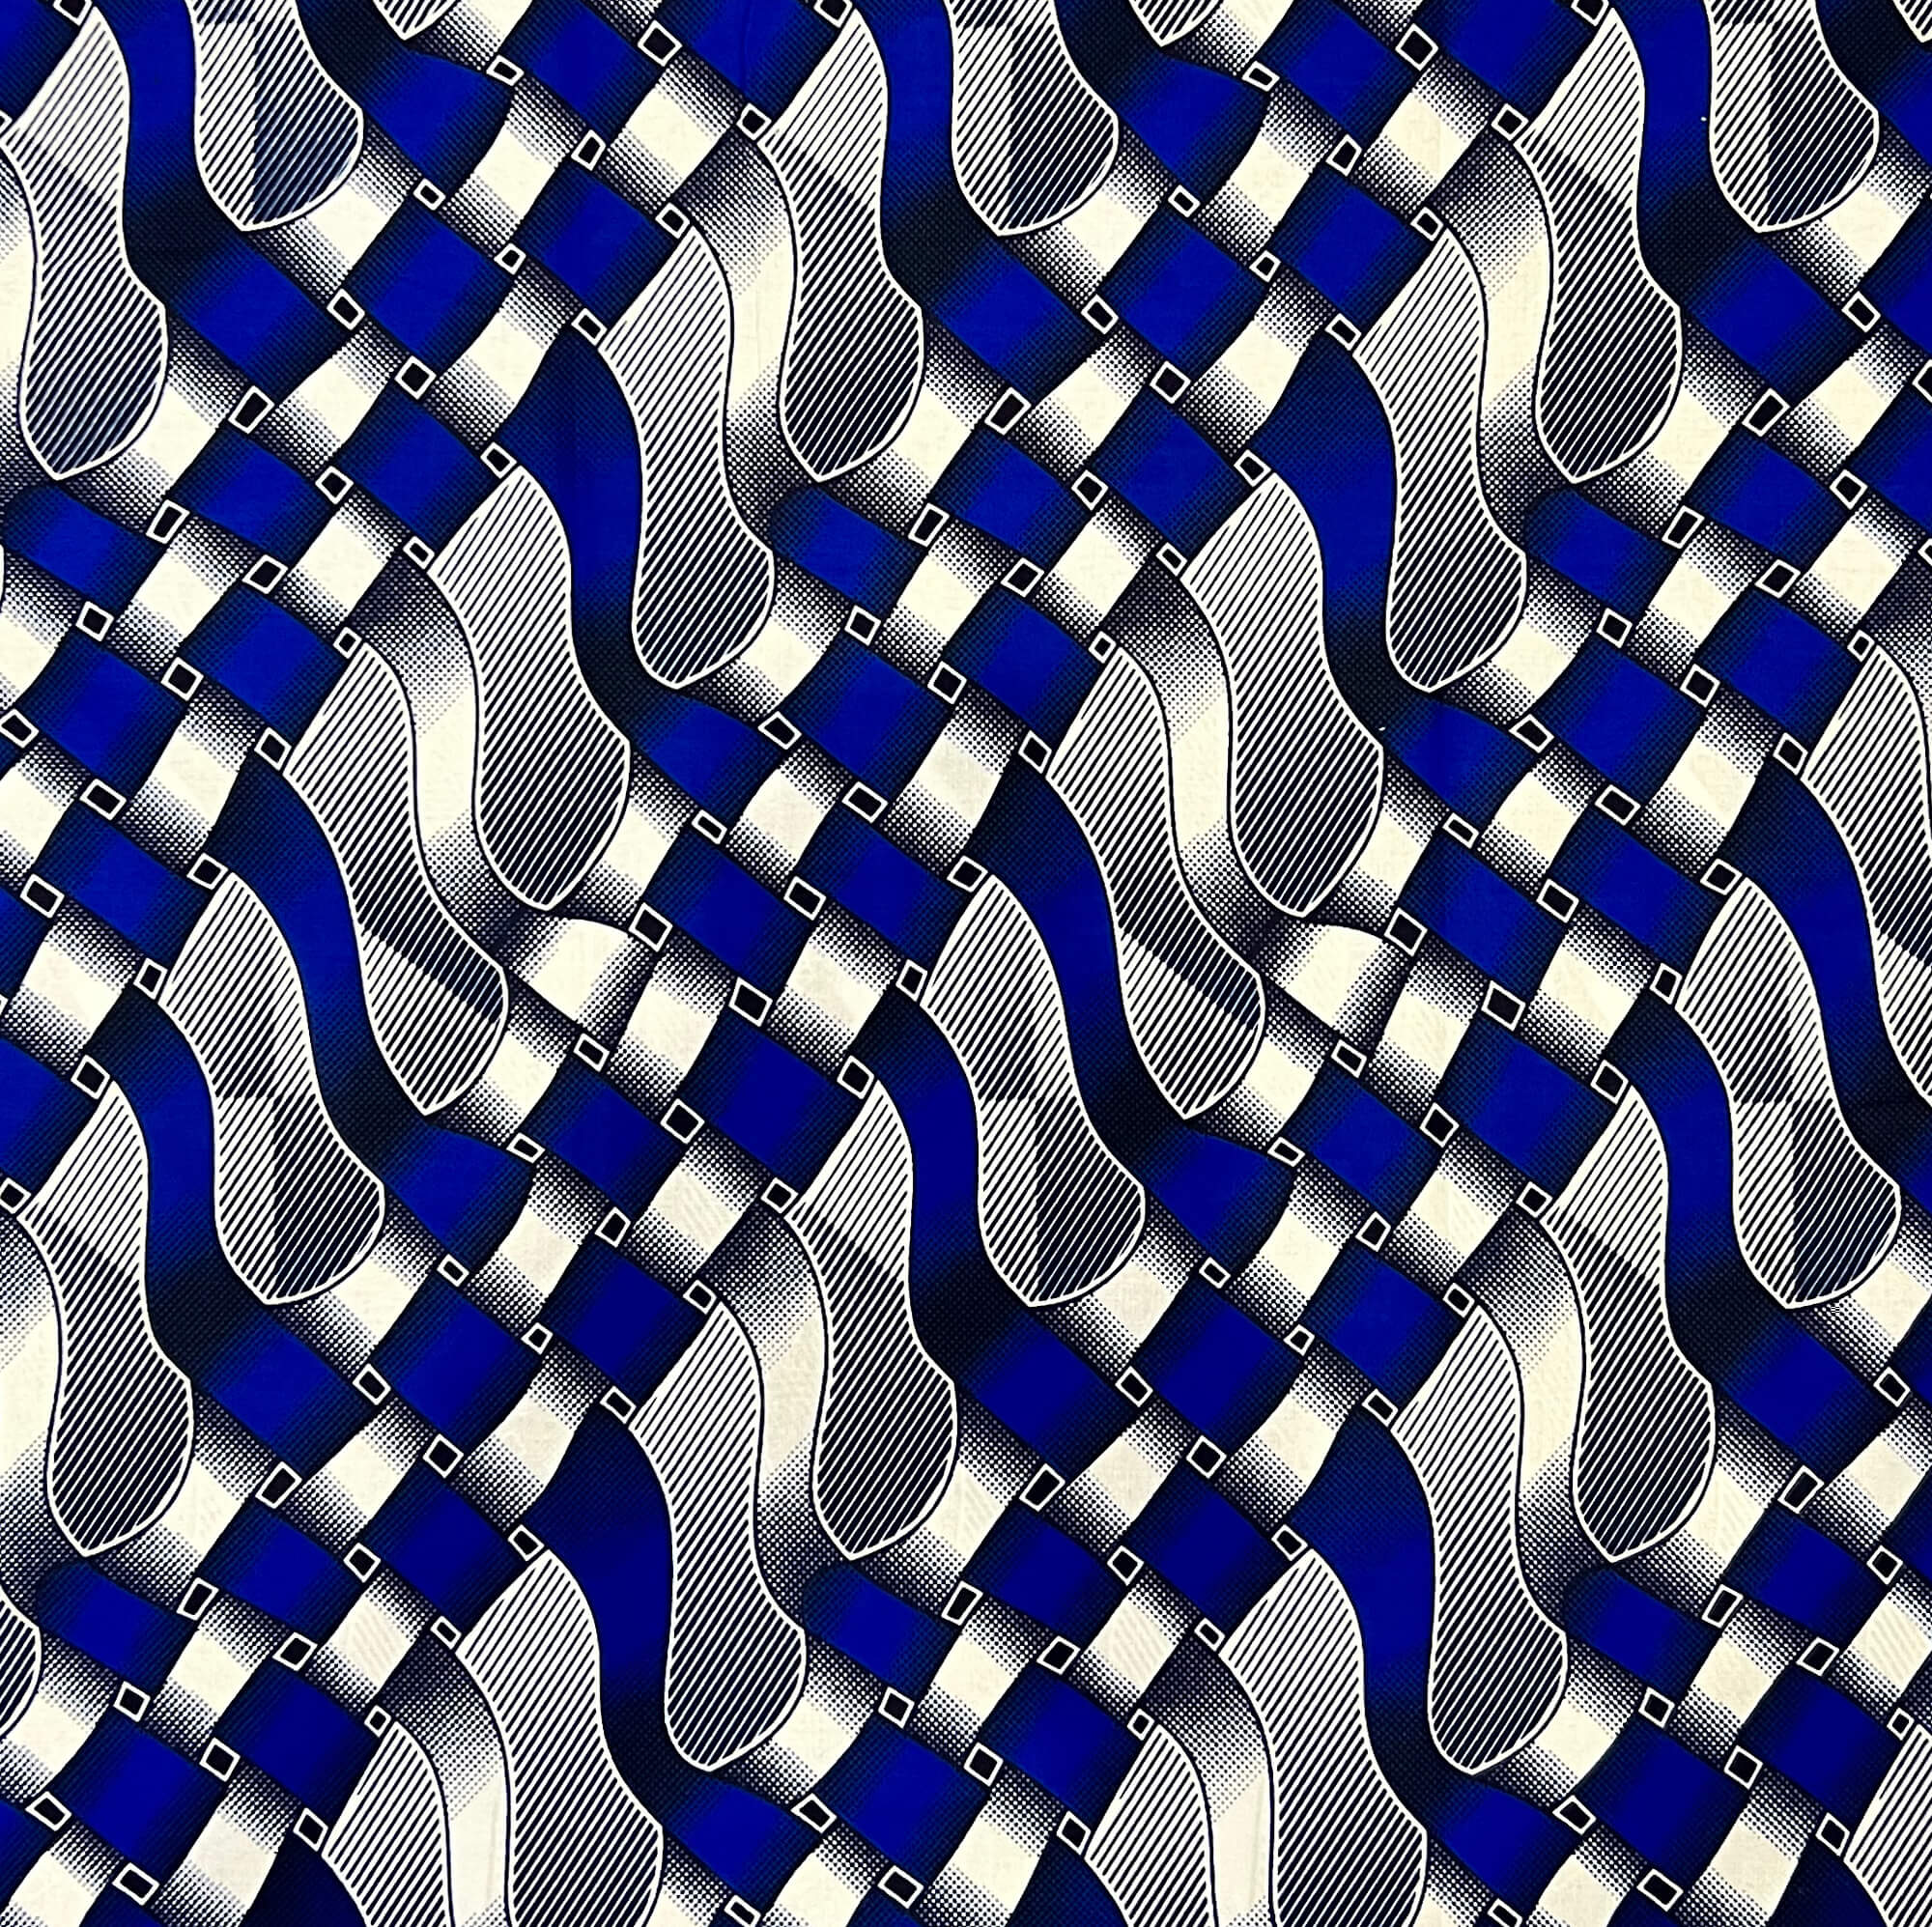 Tissu - Wax 100% coton - Graphiques - Bleu / Noir / Blanc